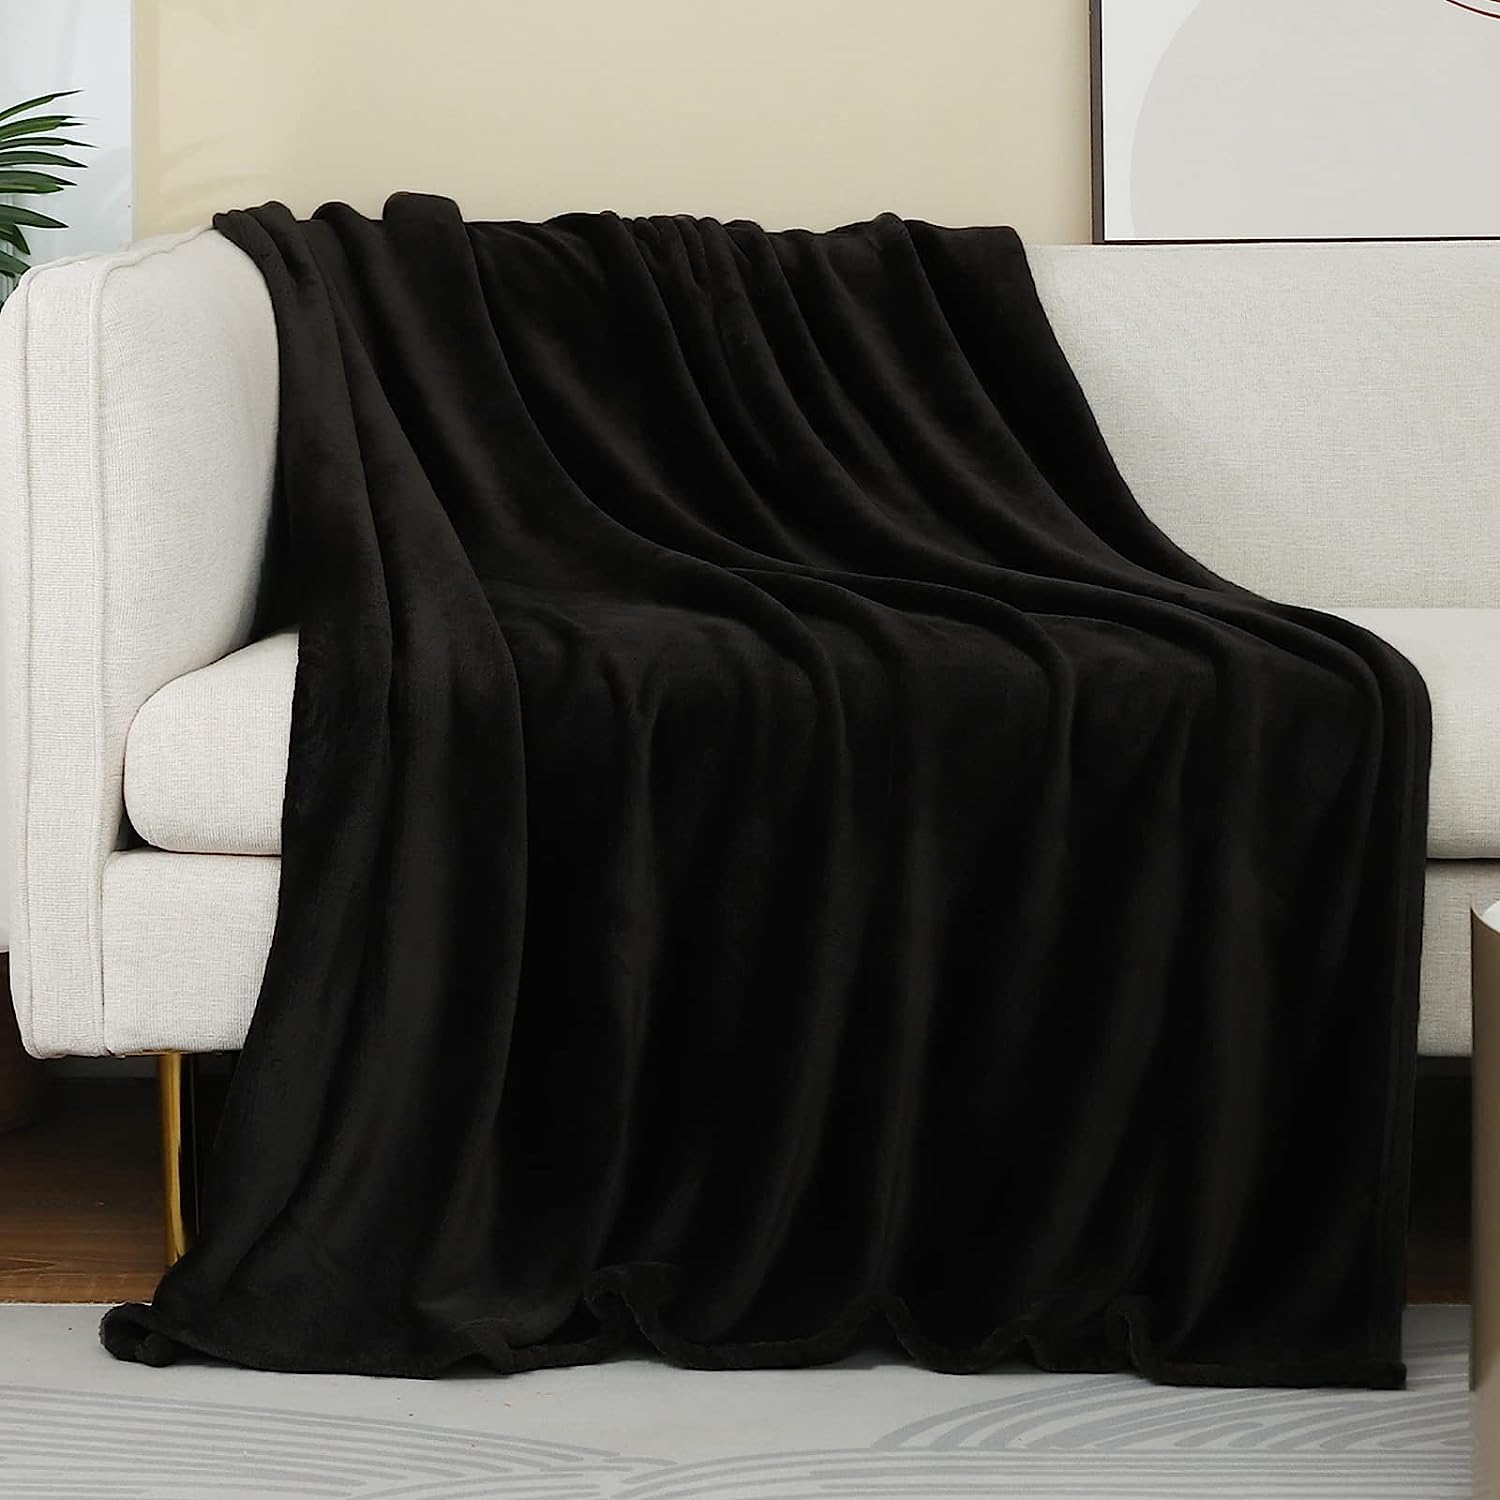 Manta negra de forro polar (50x60 pulgadas), manta de felpa súpersuave -  VIRTUAL MUEBLES